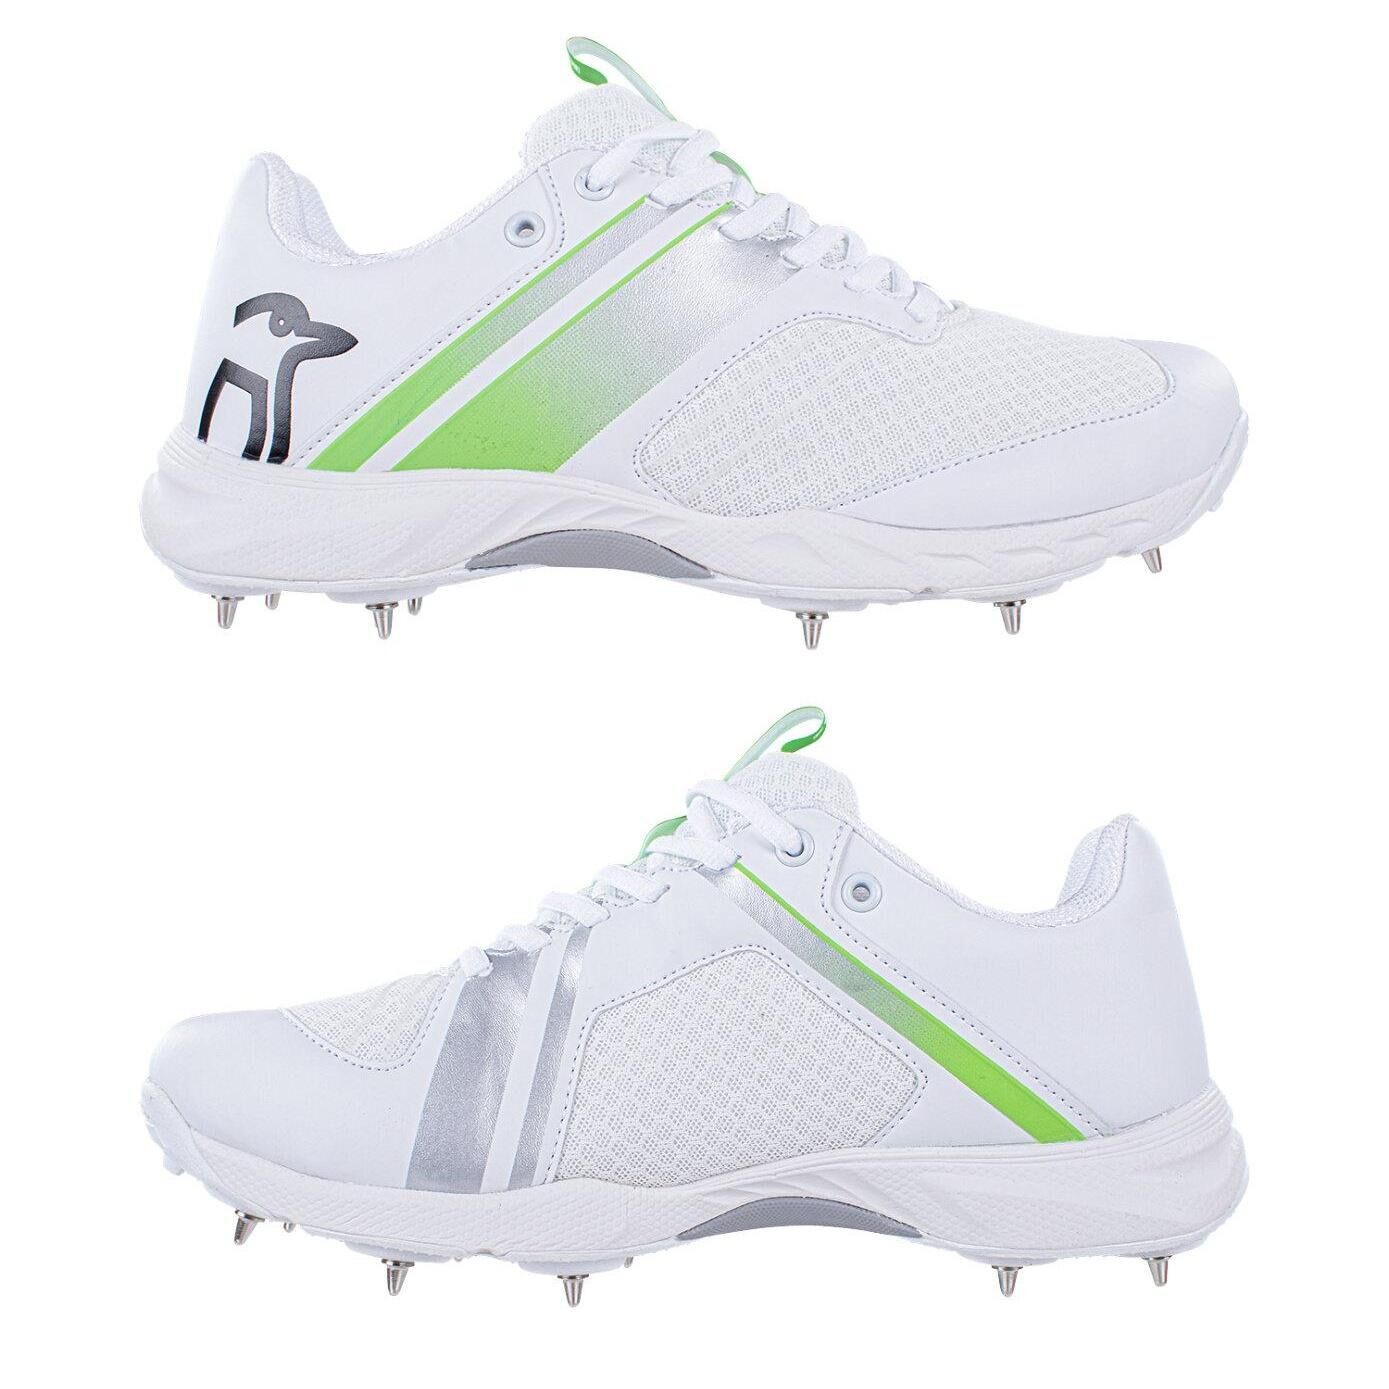 KOOKABURRA Unisex Adult KC 3.0 Spiked Cricket Shoes (White/Lime)